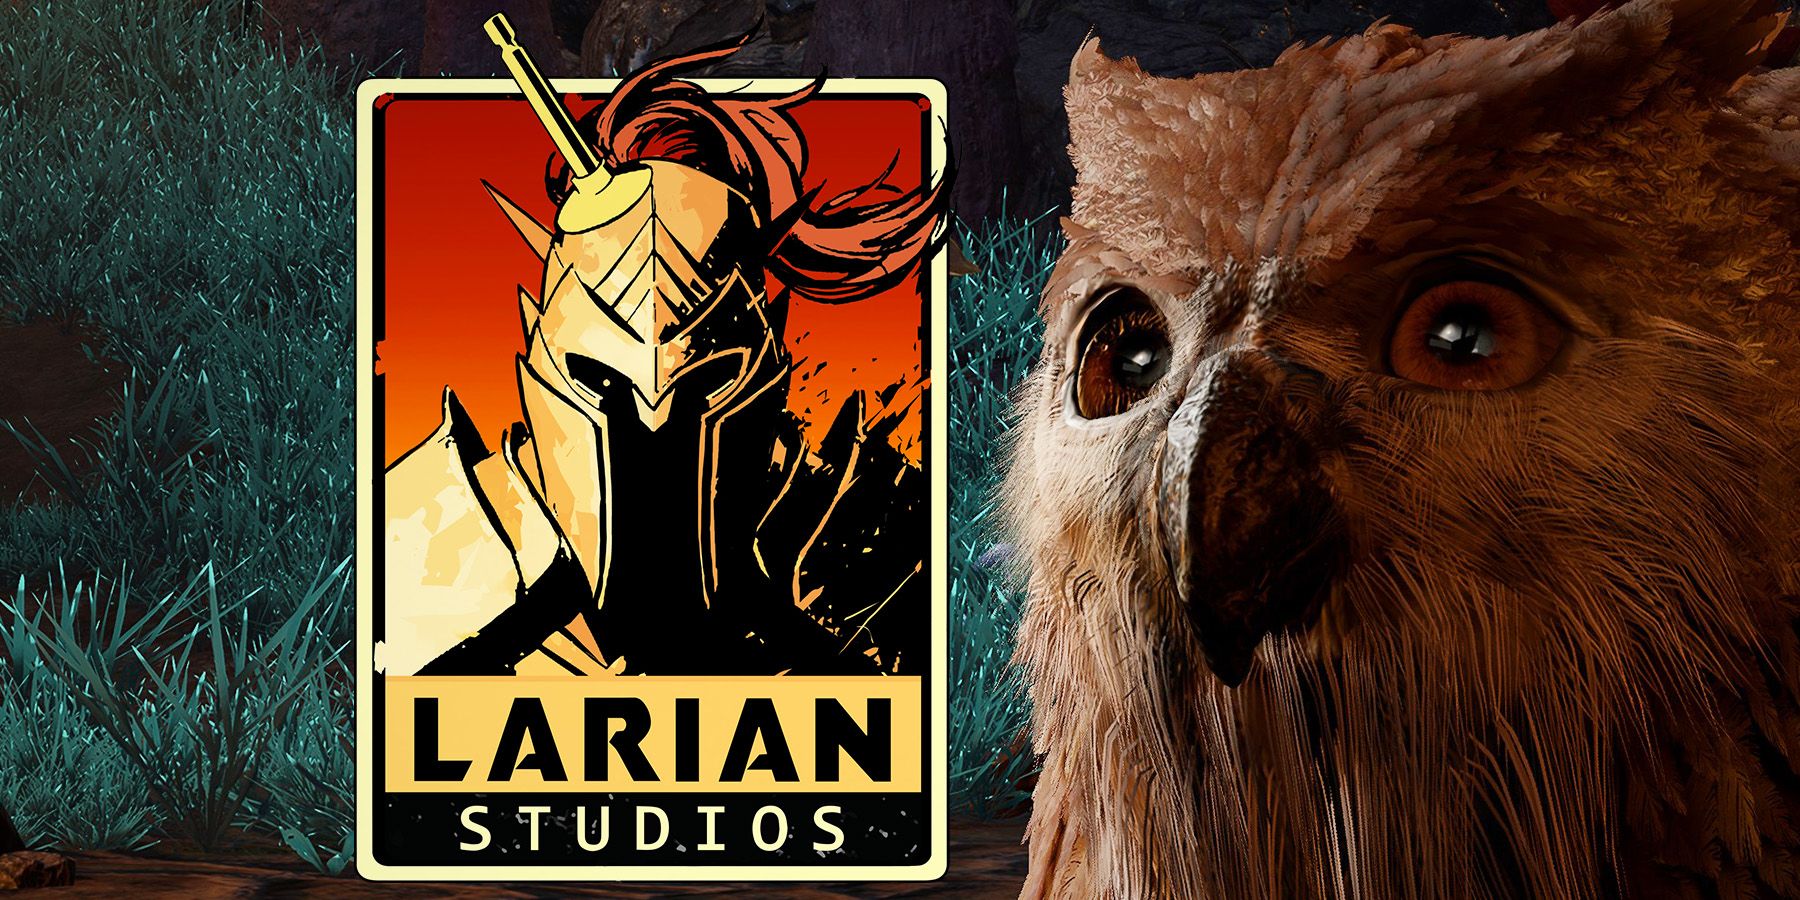 Baldur's Gate 3 owlbear cub close-up looking wide-eyedly at Larian Studios logo composite